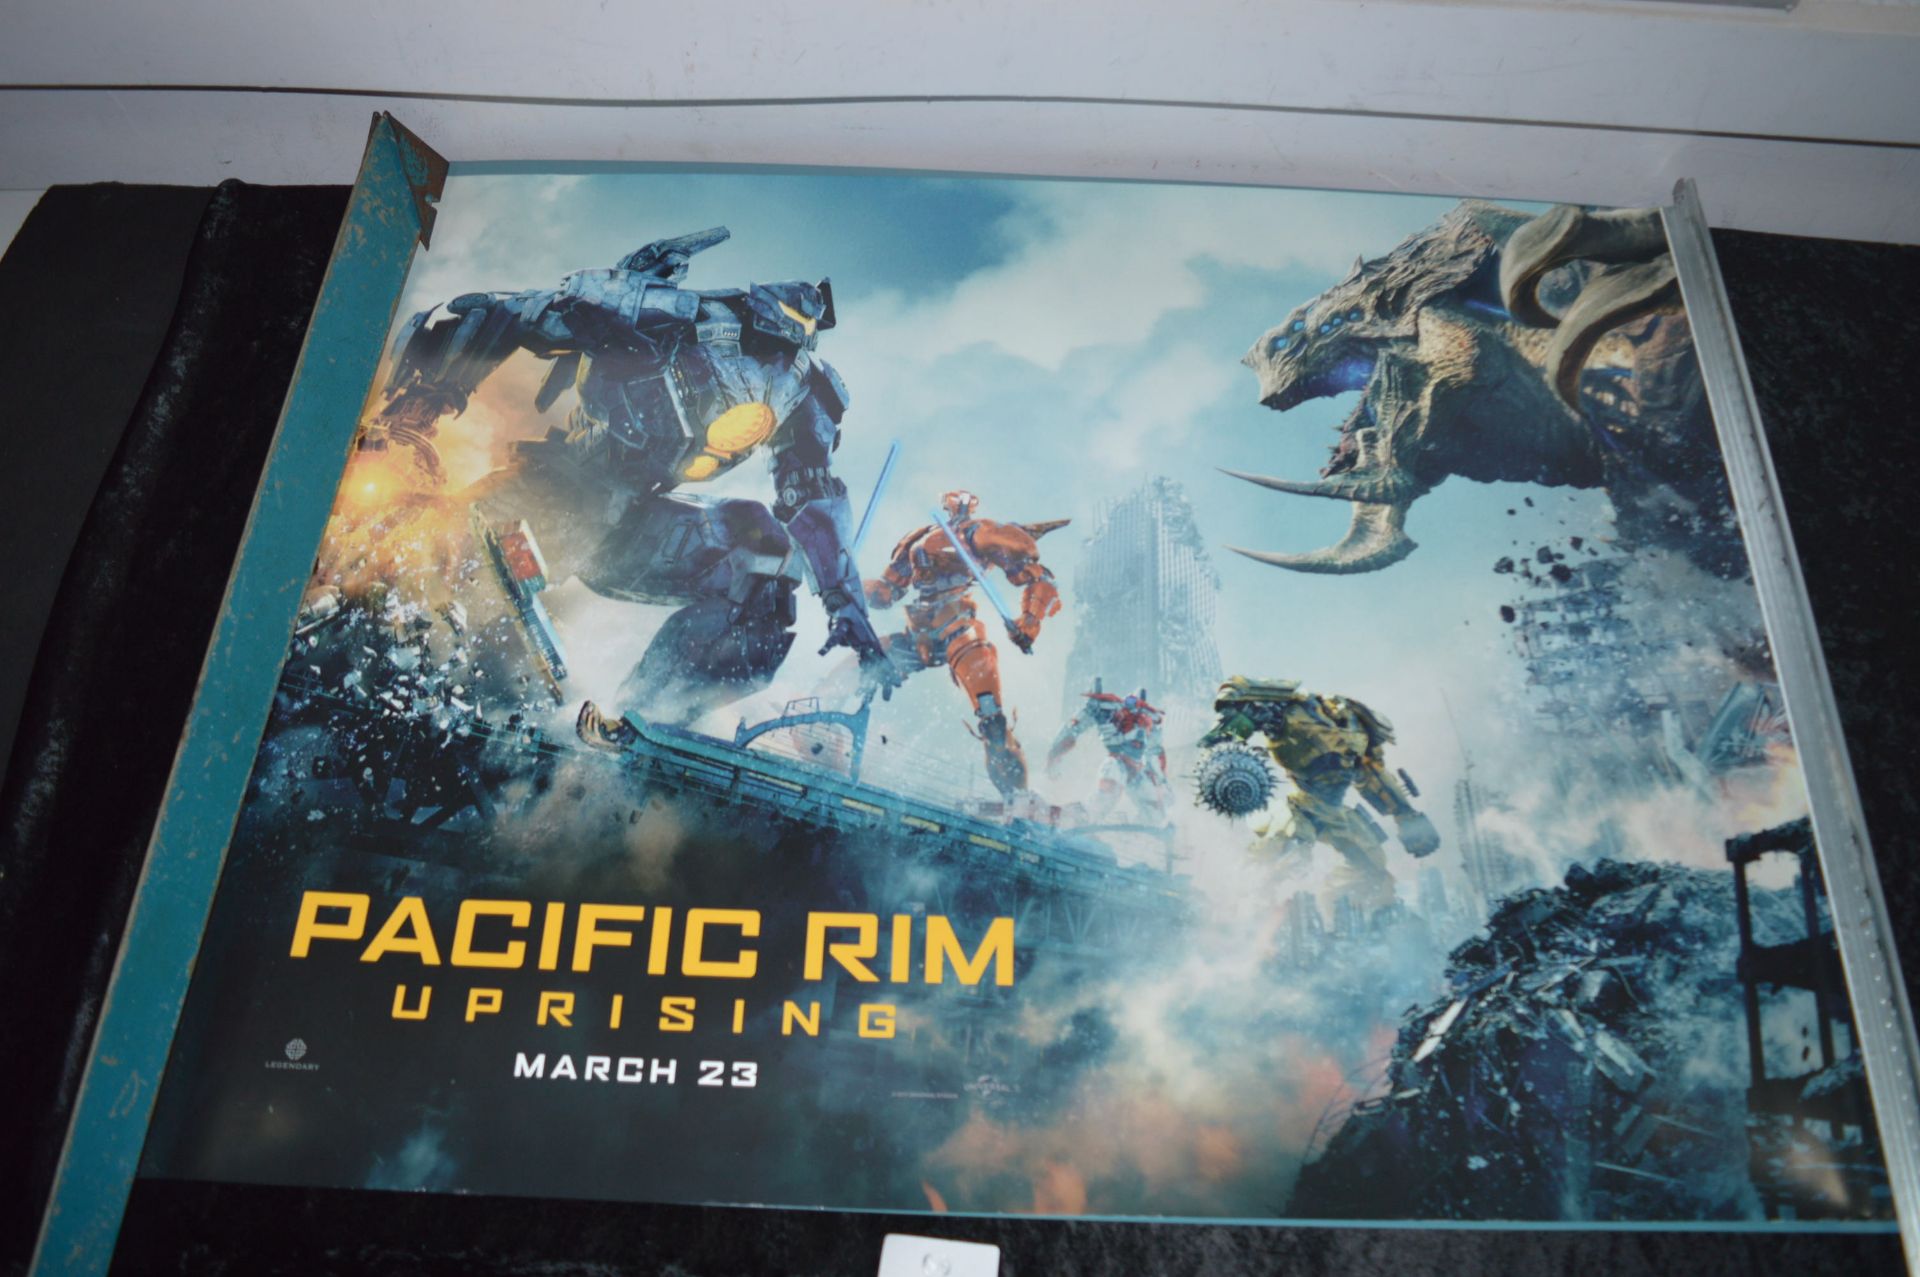 *Cinema Poster - Pacific Rim Uprising